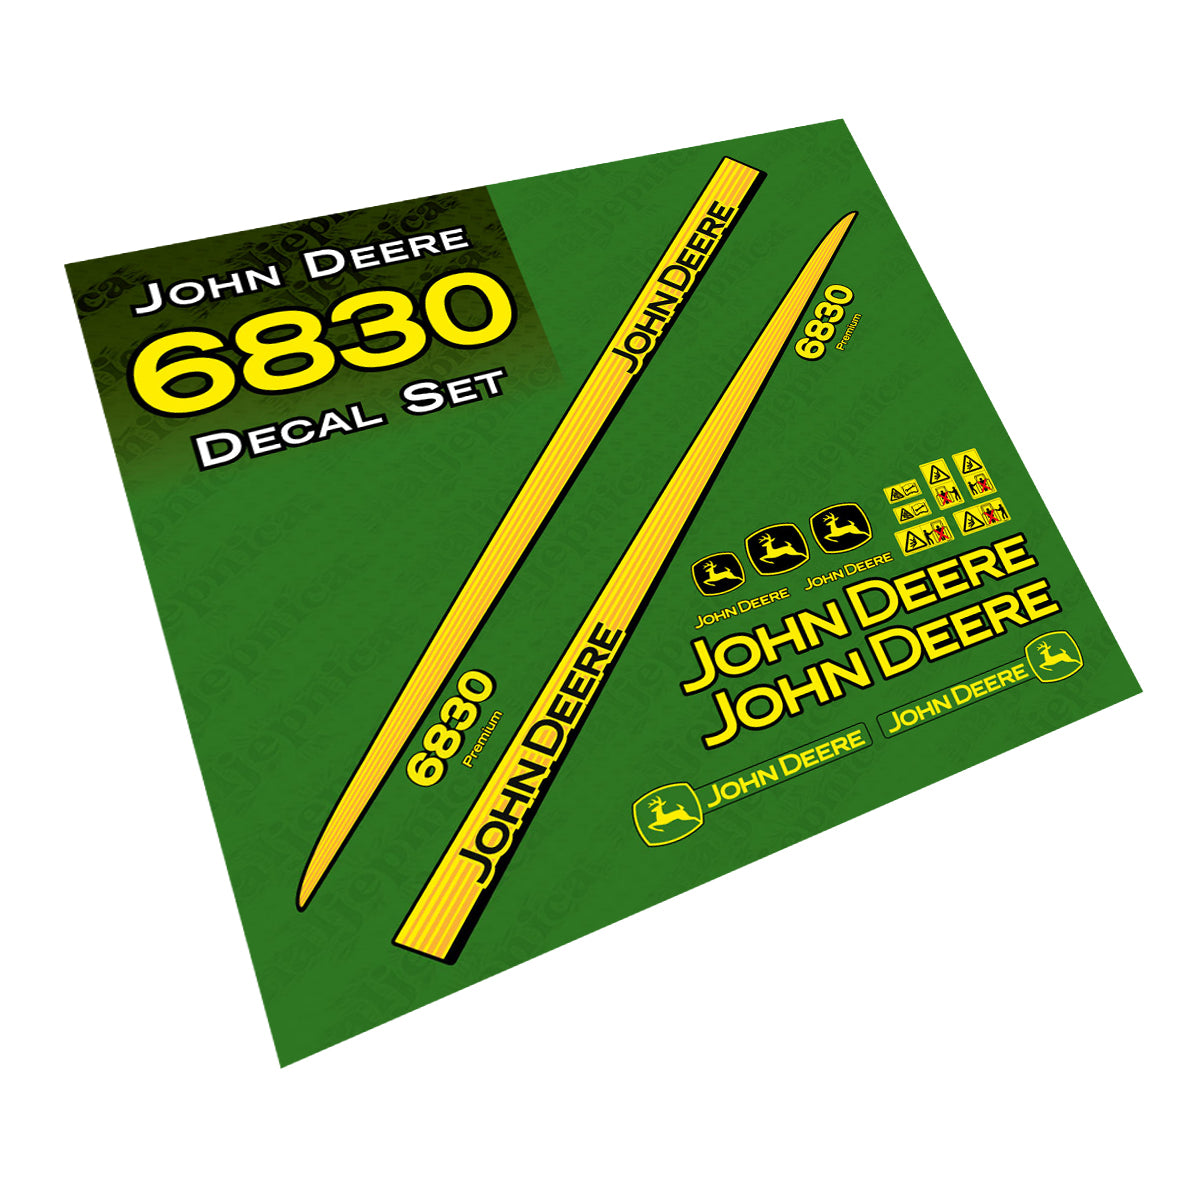 John Deere 6830 tractor decal adesivo aufkleber sticker set